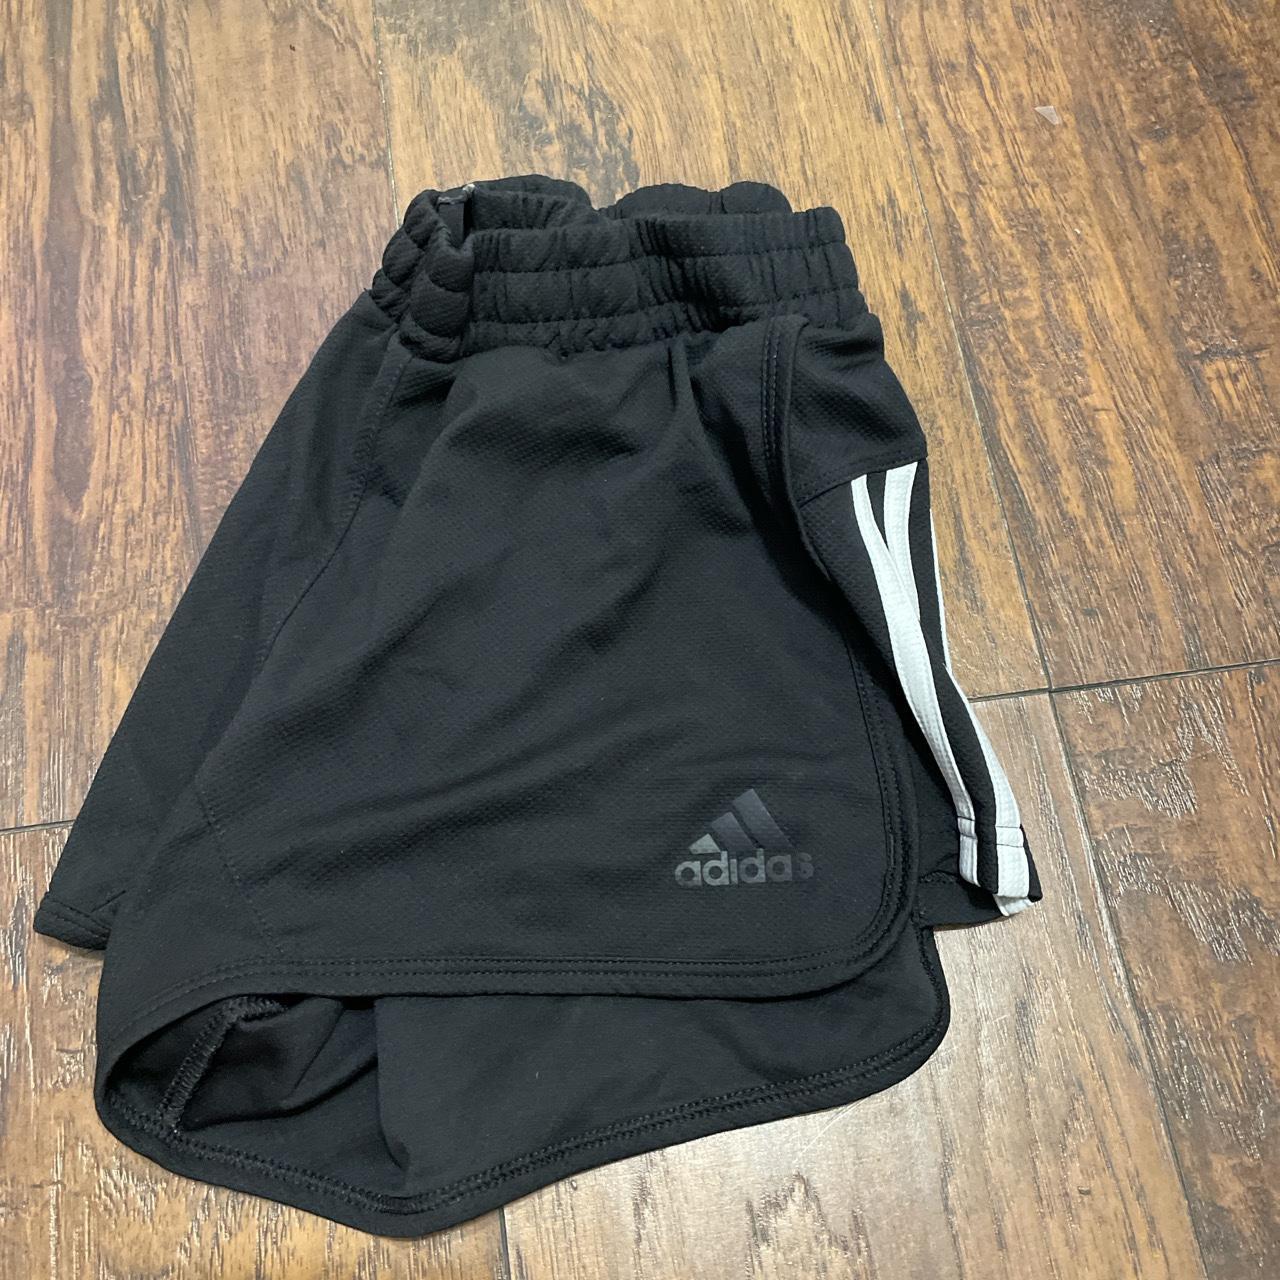 Adidas shorts - Depop